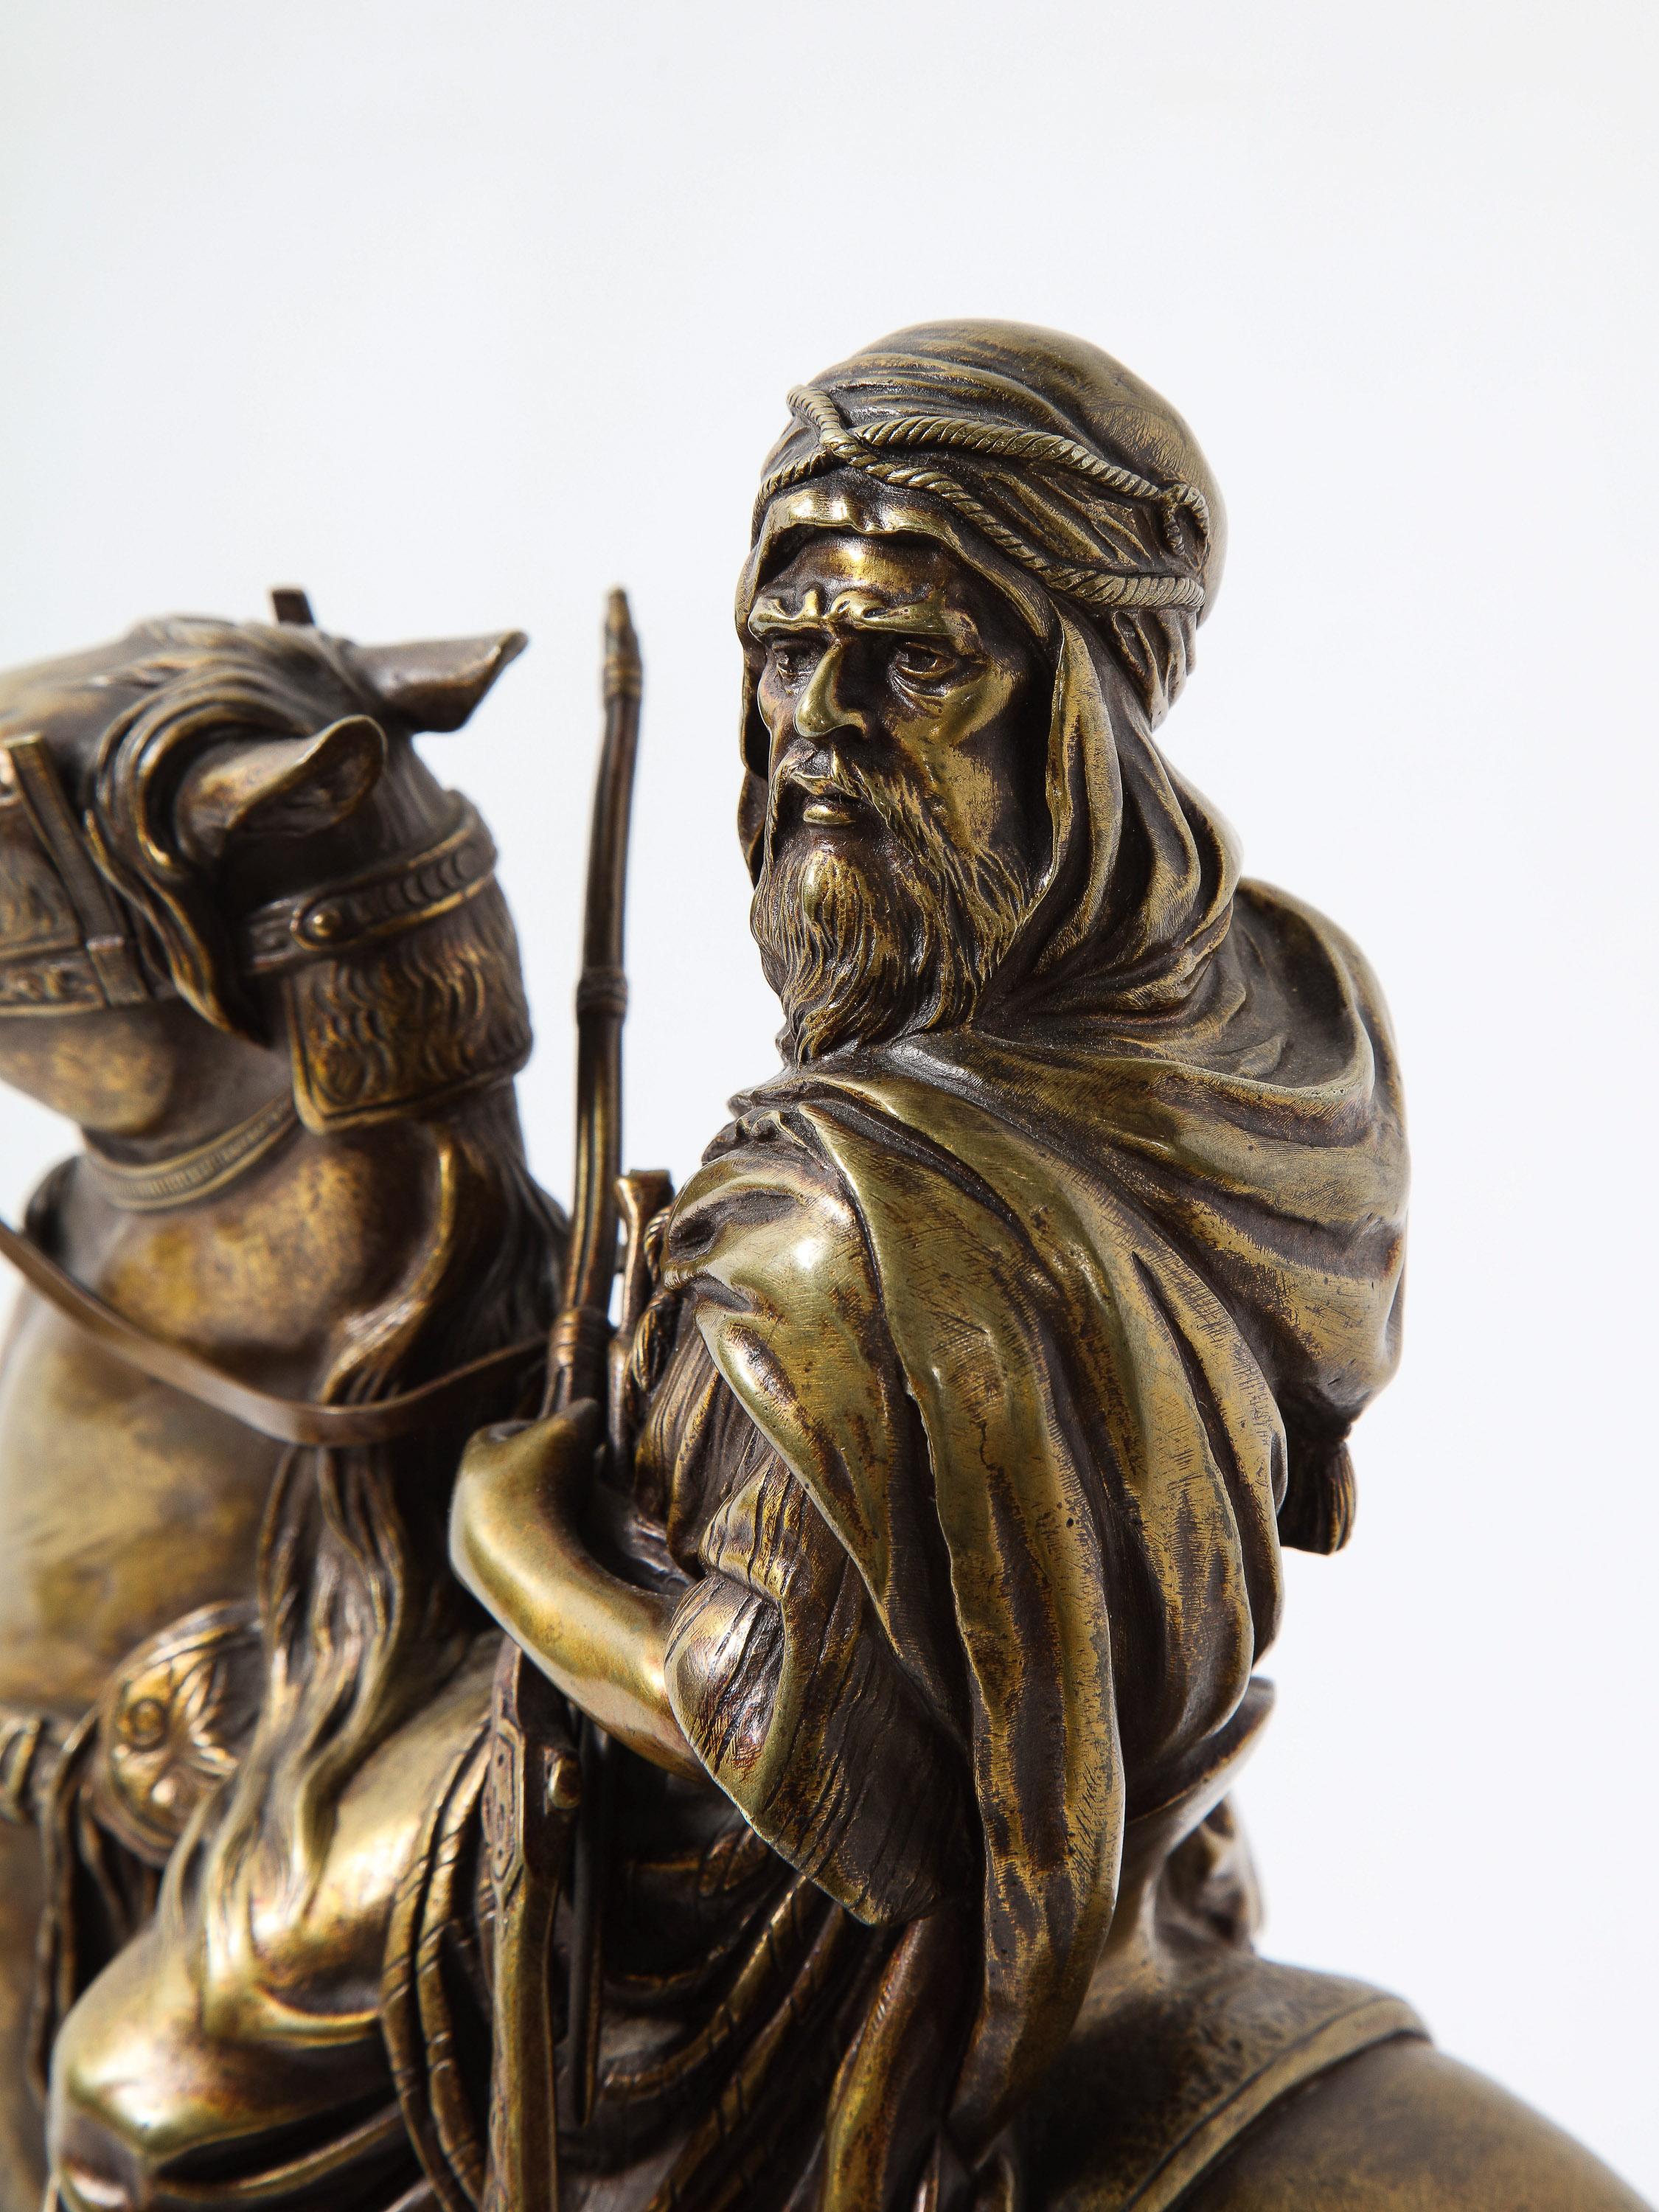 French Gilt Bronze Sculpture of an Arab Riding a Horse, A. De Gericke 7